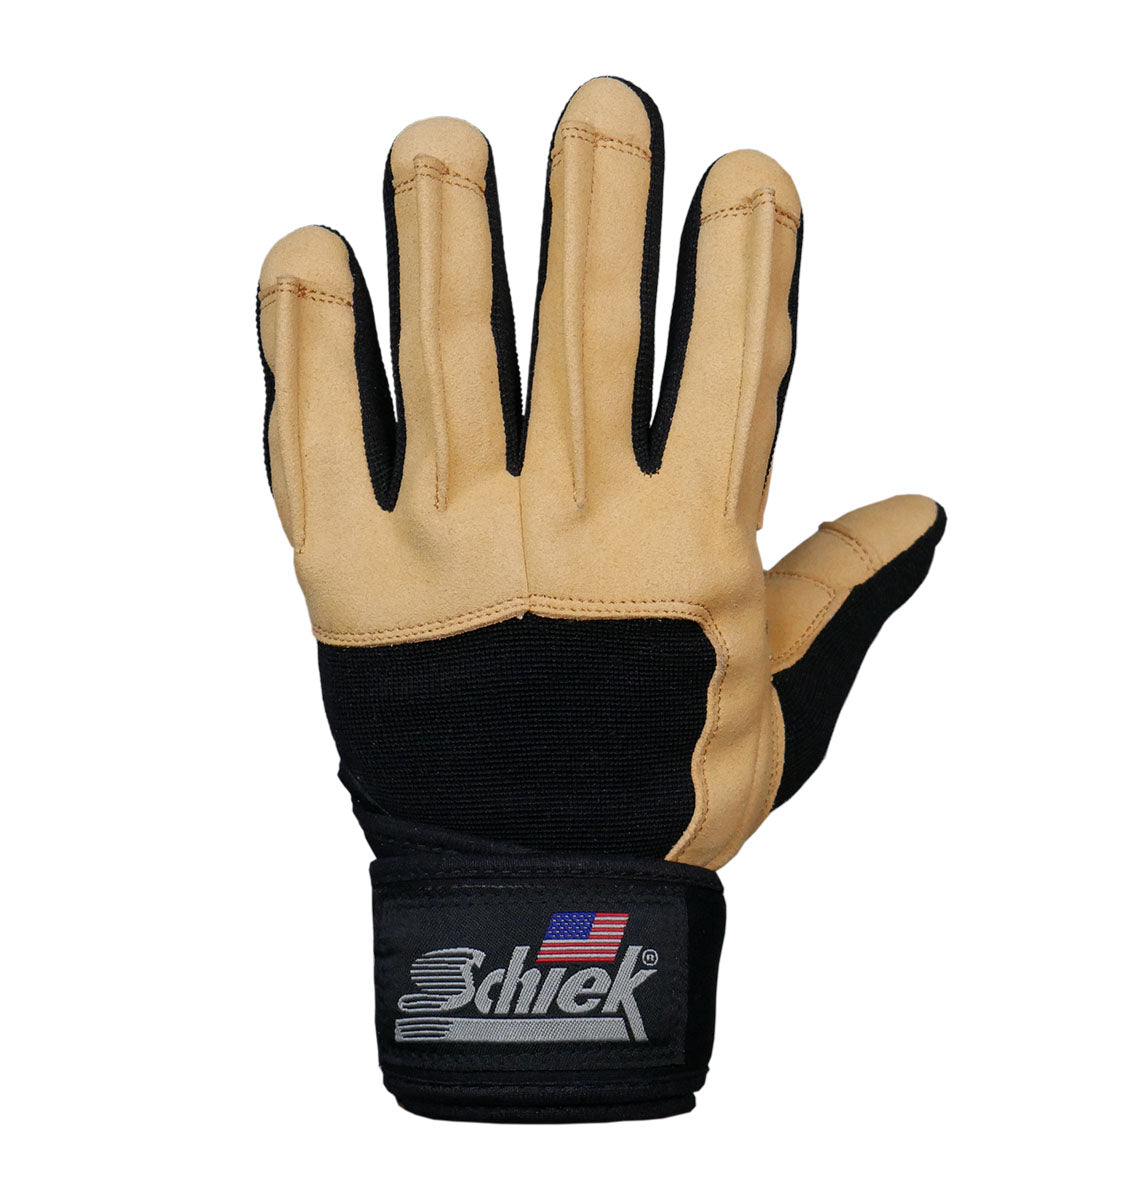 Schiek Power Series Lifting Gloves with Wrist Wraps - Full Finger - 1